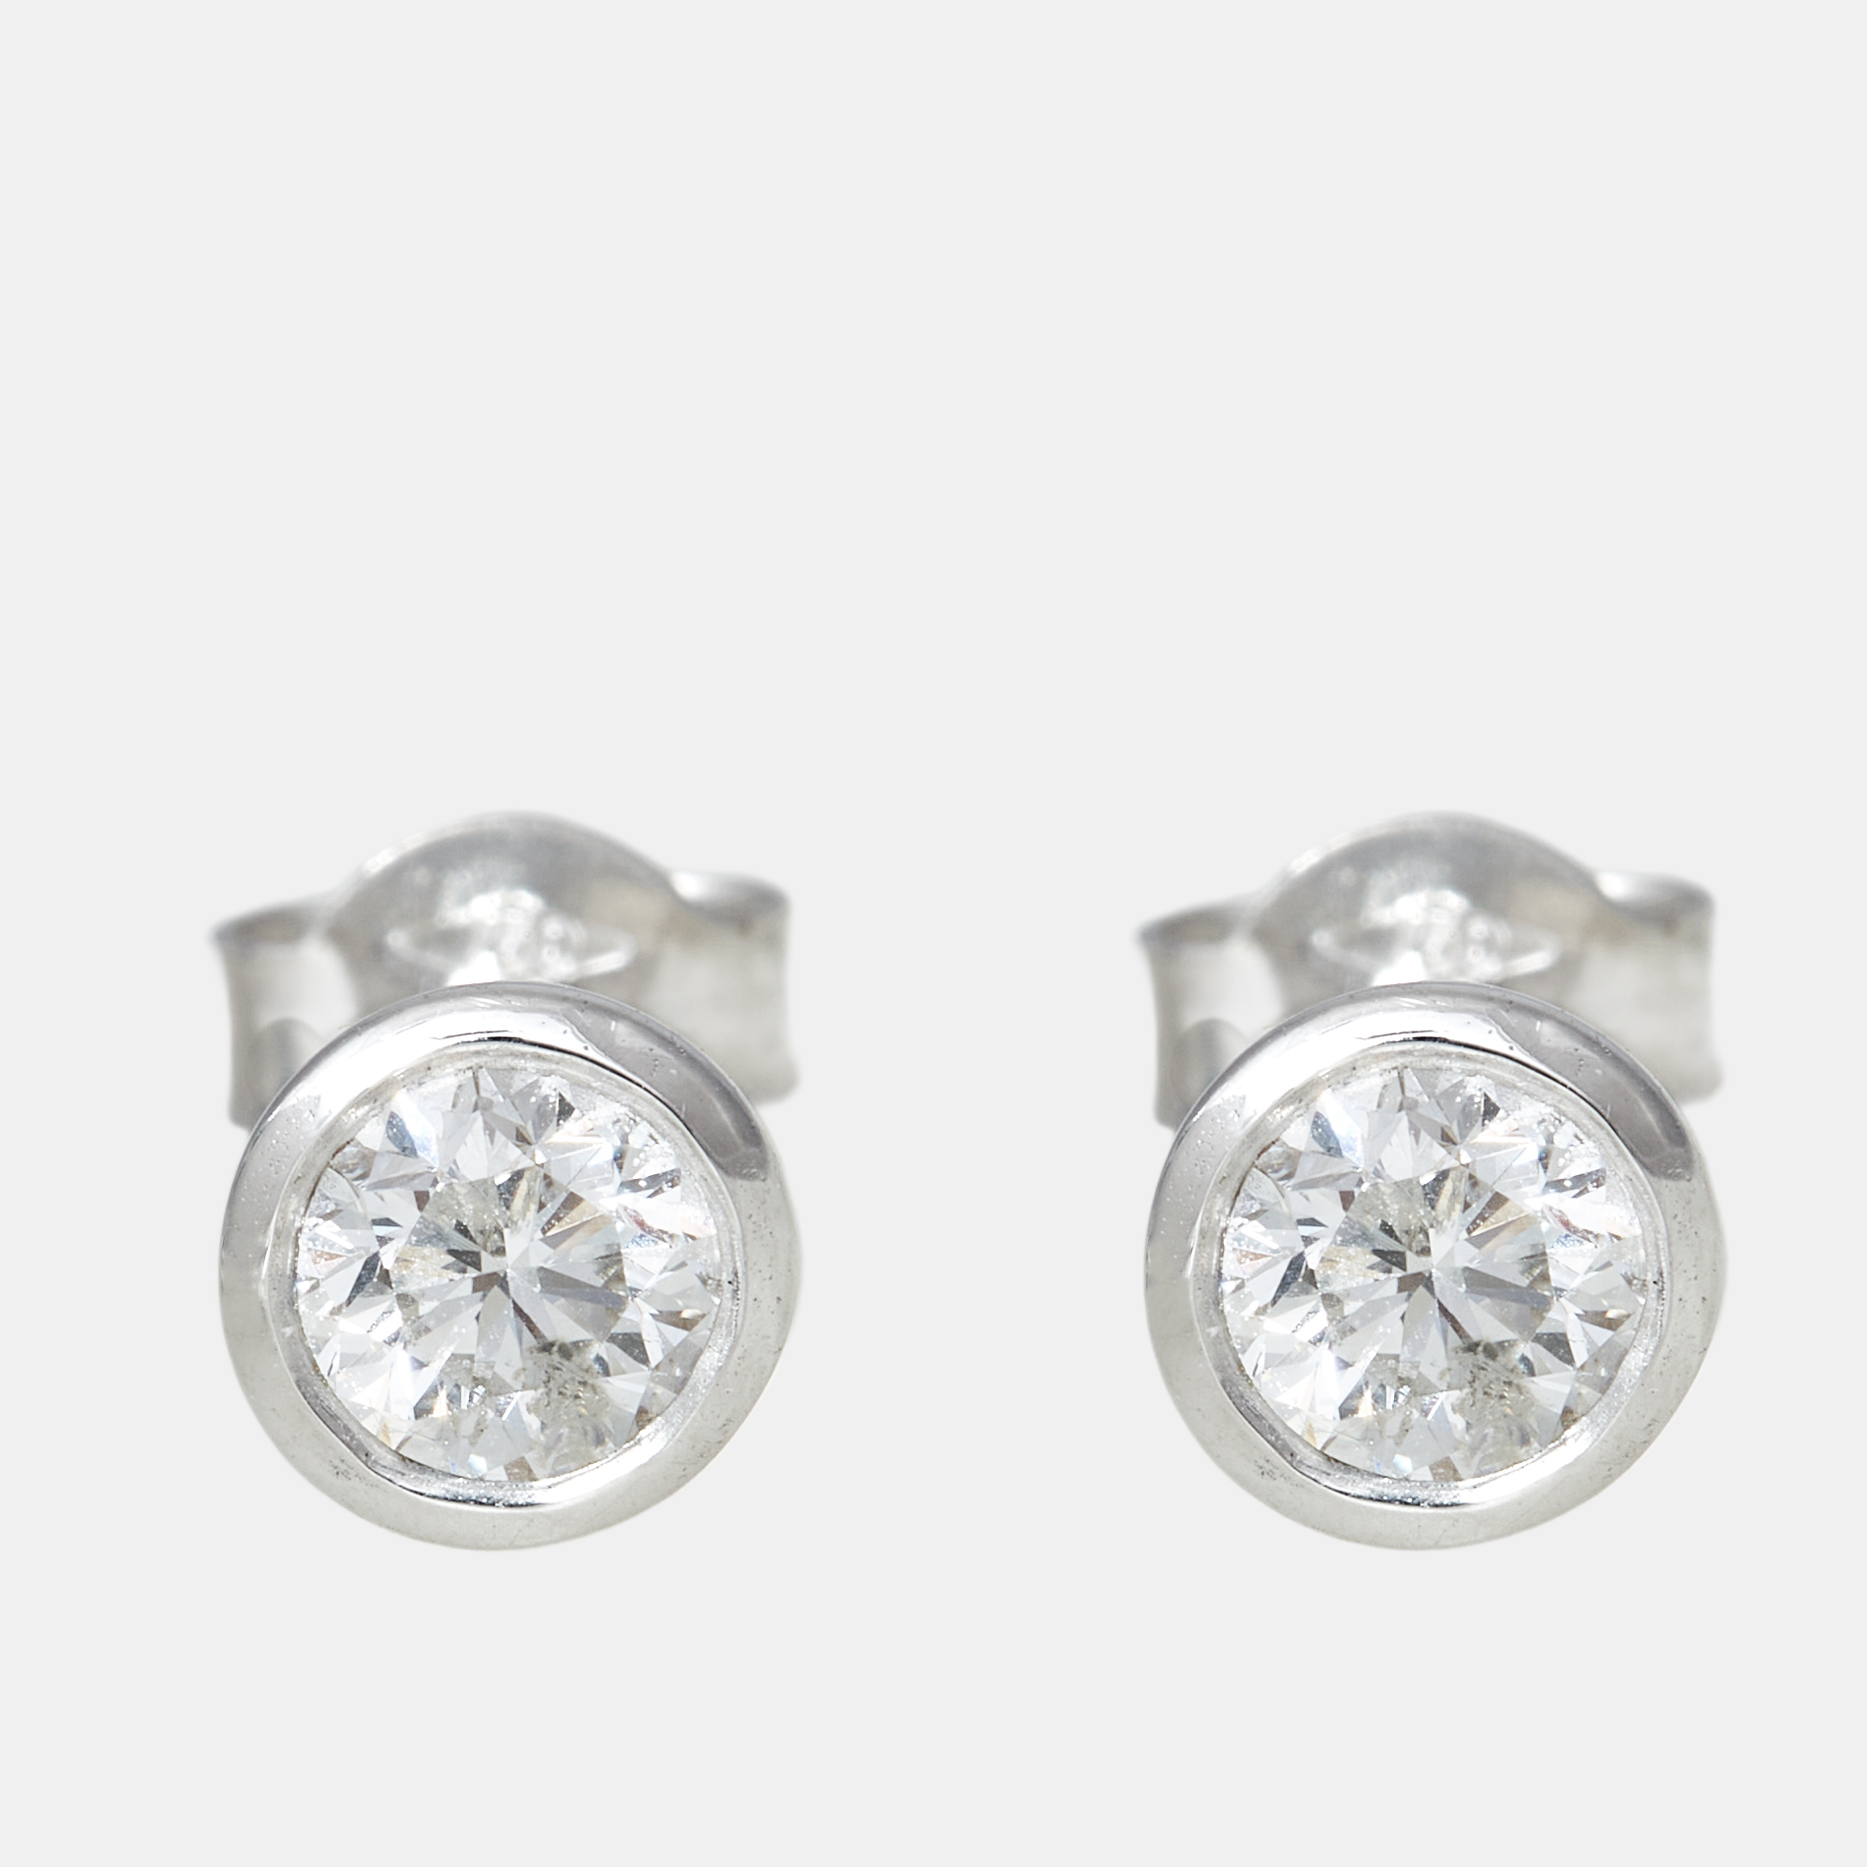 The diamond edit 18k white gold 0.6 ct diamond earrings